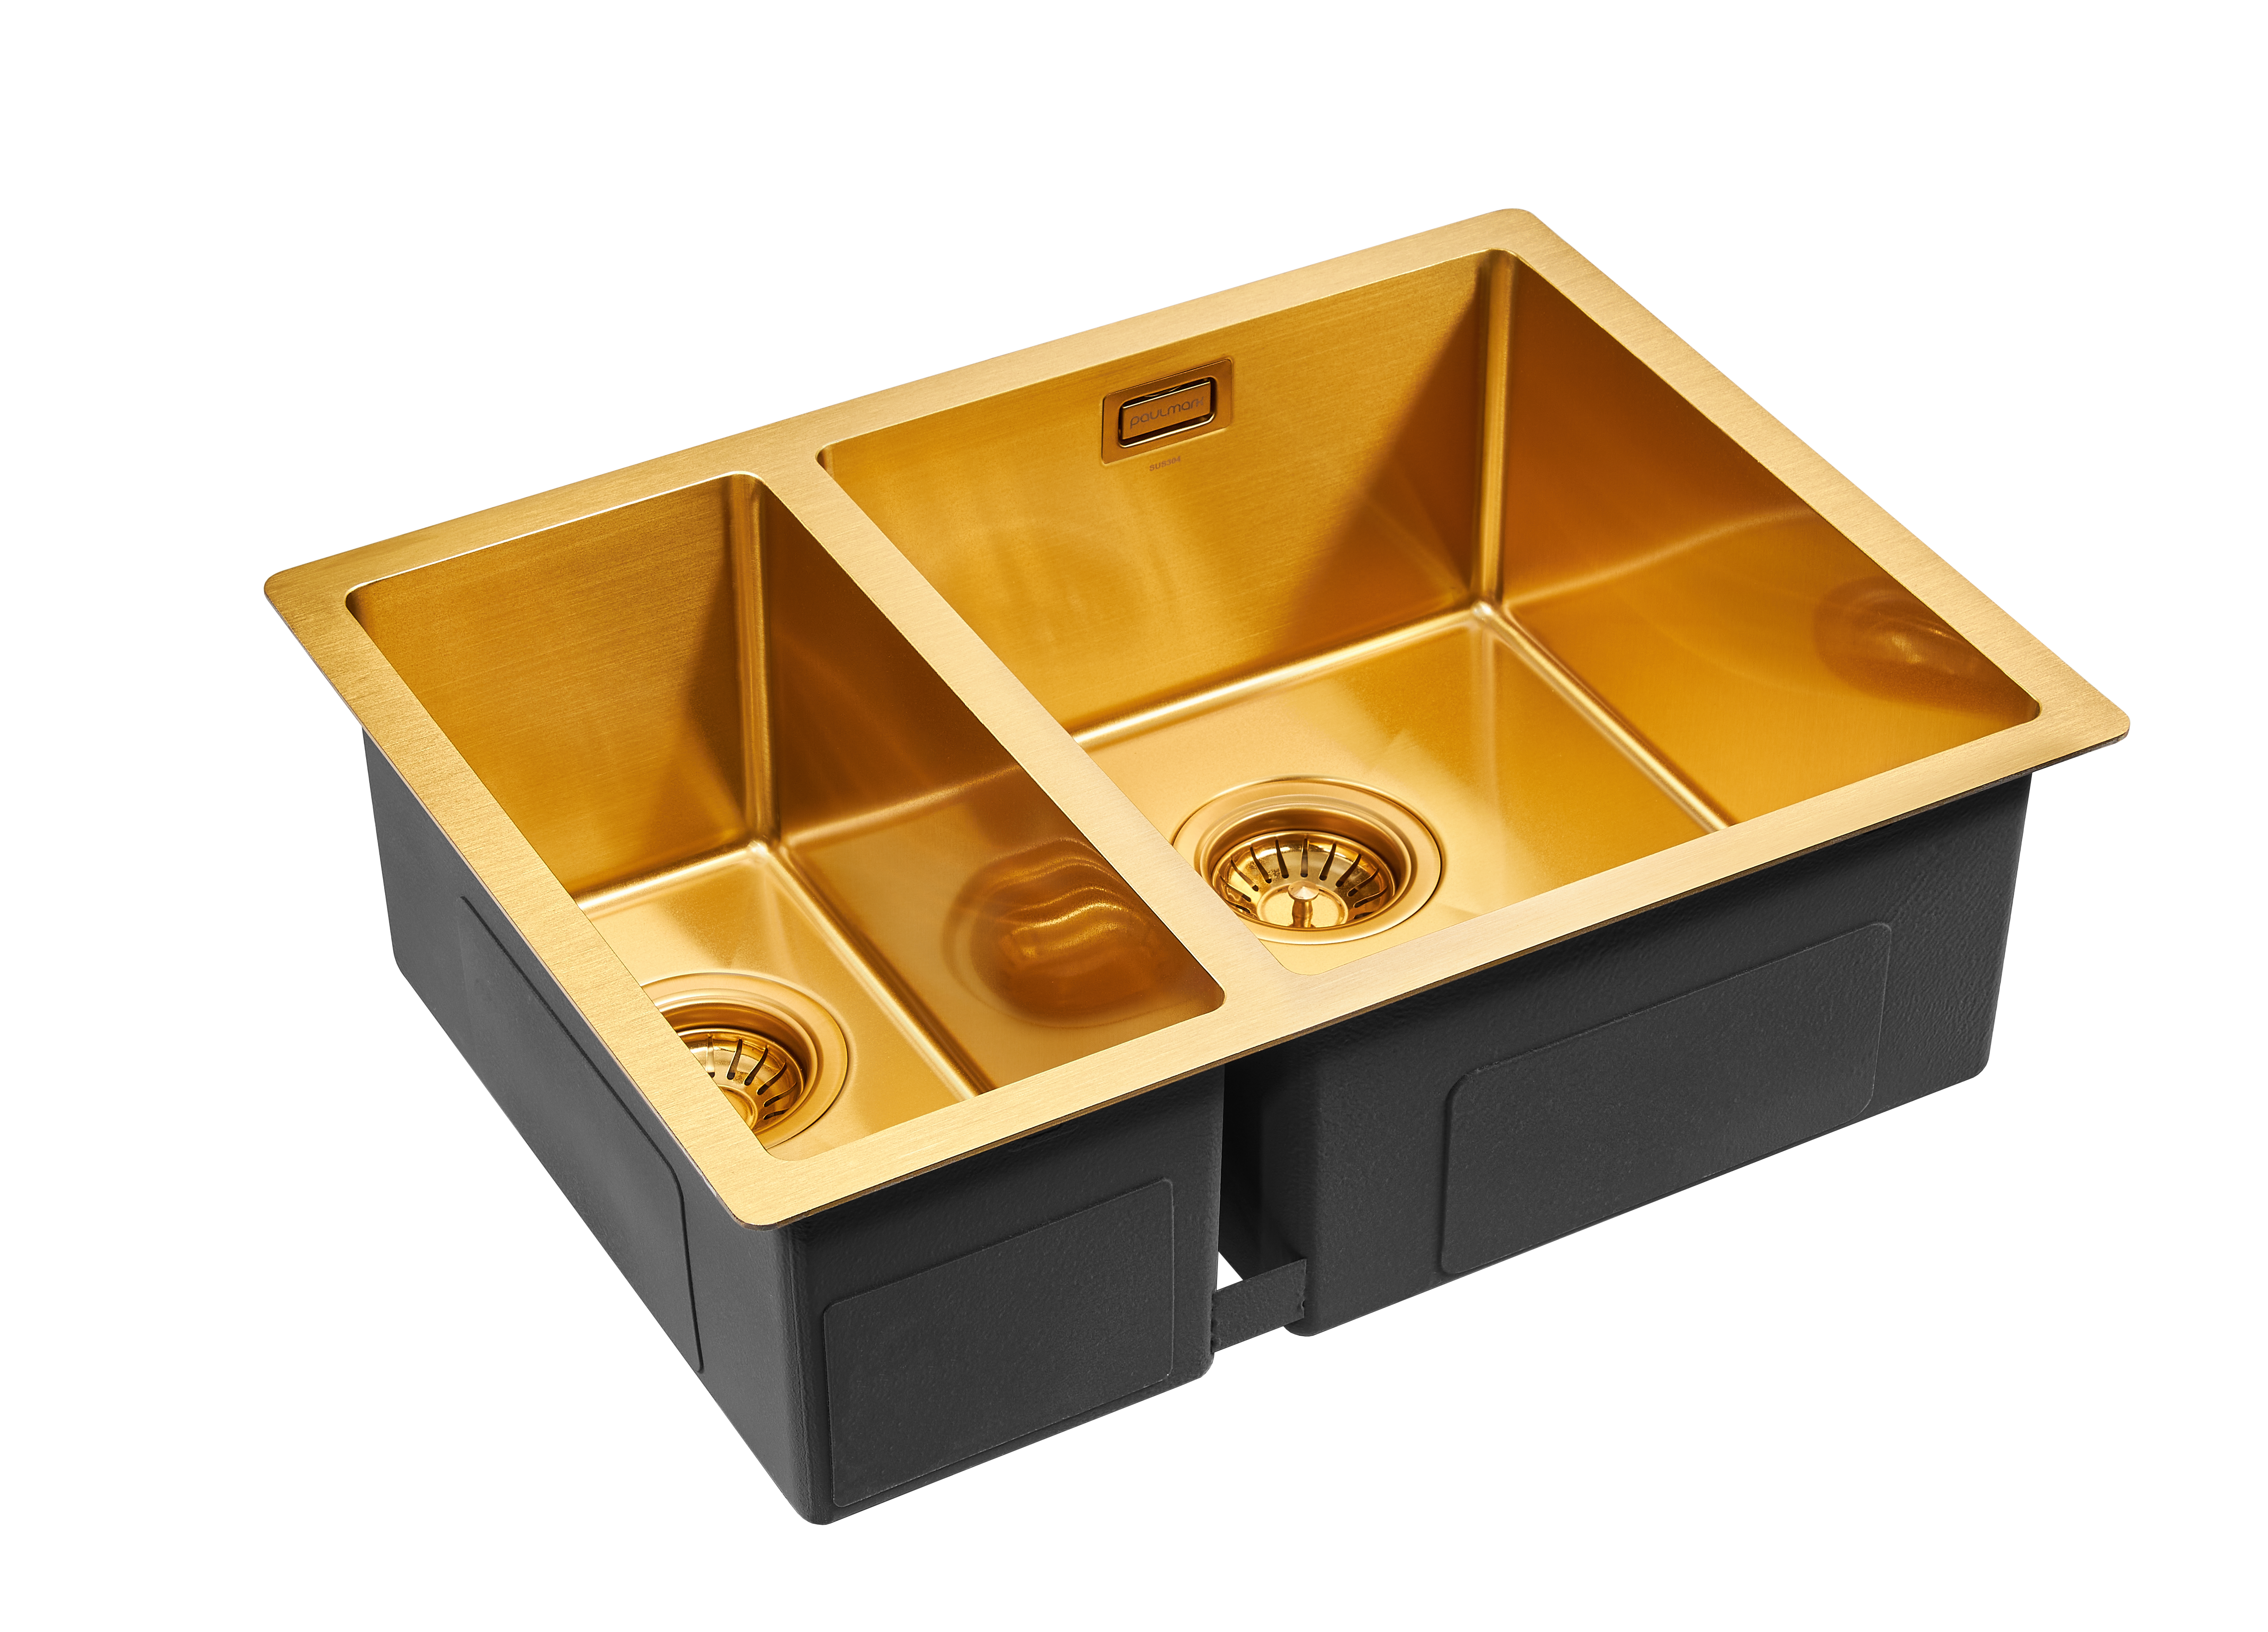 Мойка для кухни Paulmark ANNEX R PM545944-BGR правая брашированное золото